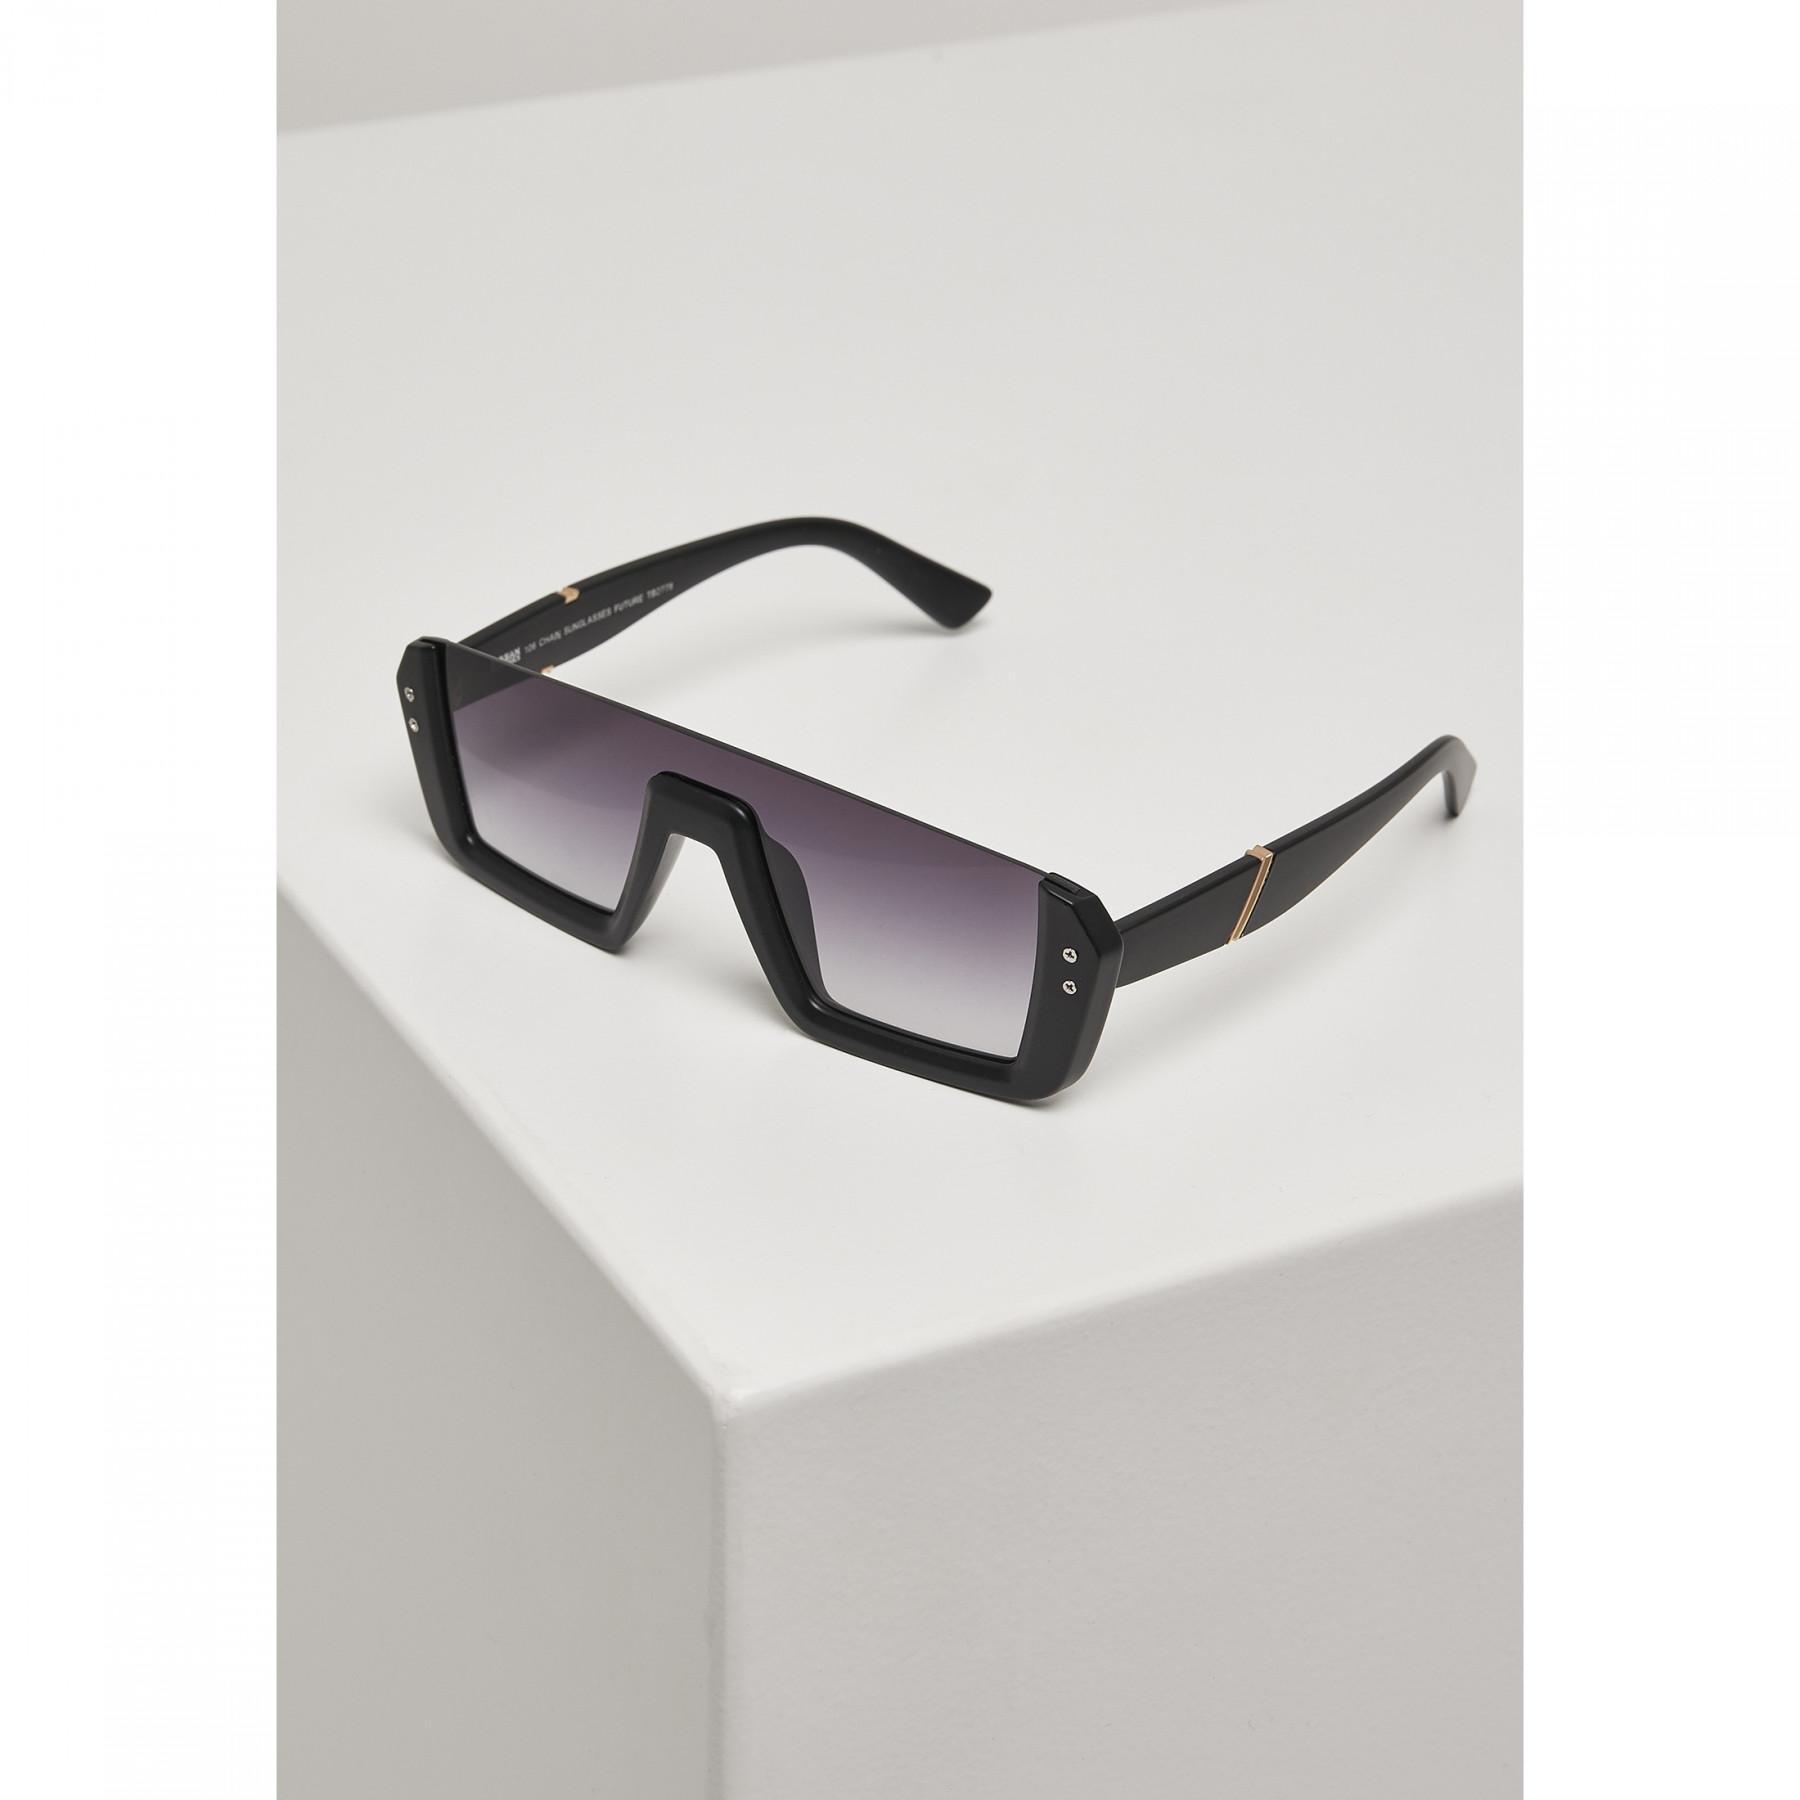 Urban Classic 106 future sunglasses